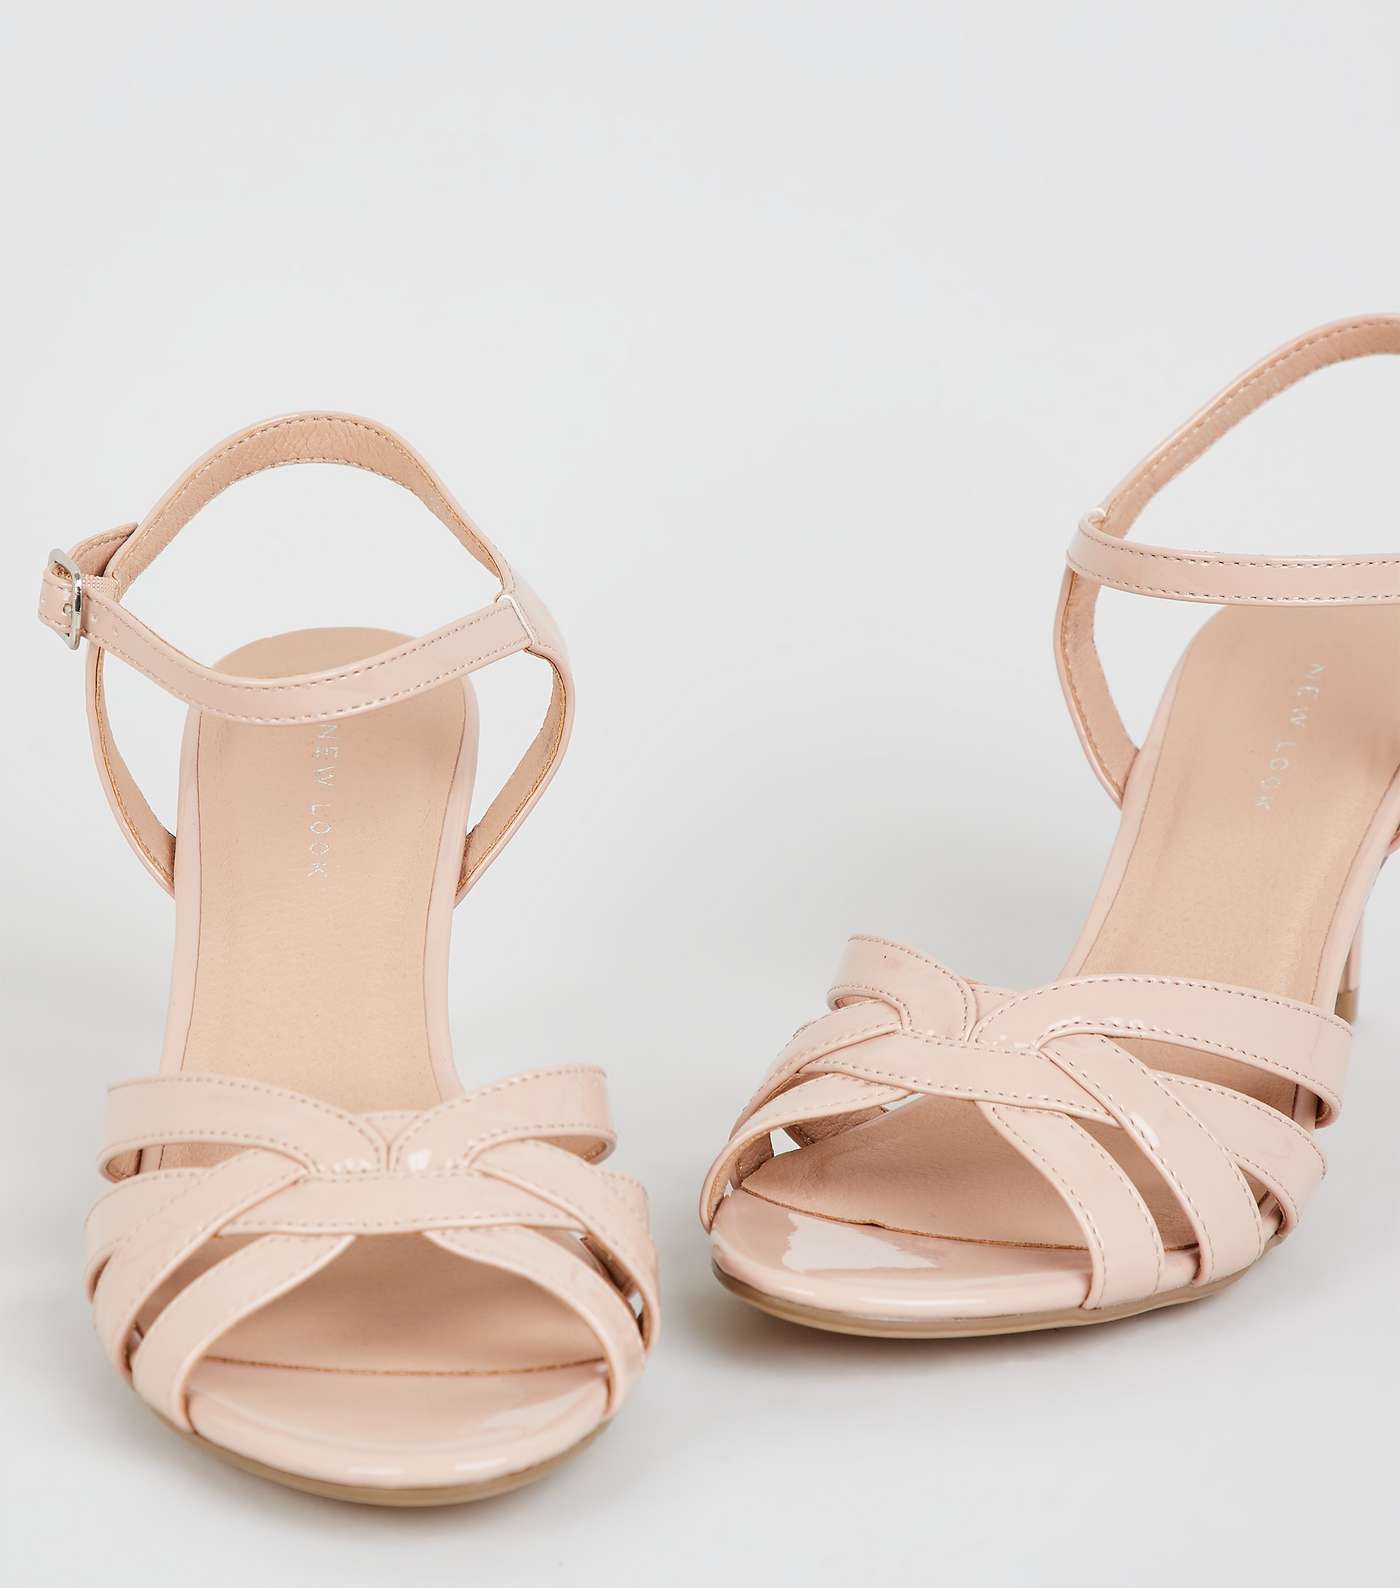 Cream Patent Woven Strap Heels Sandals Image 3